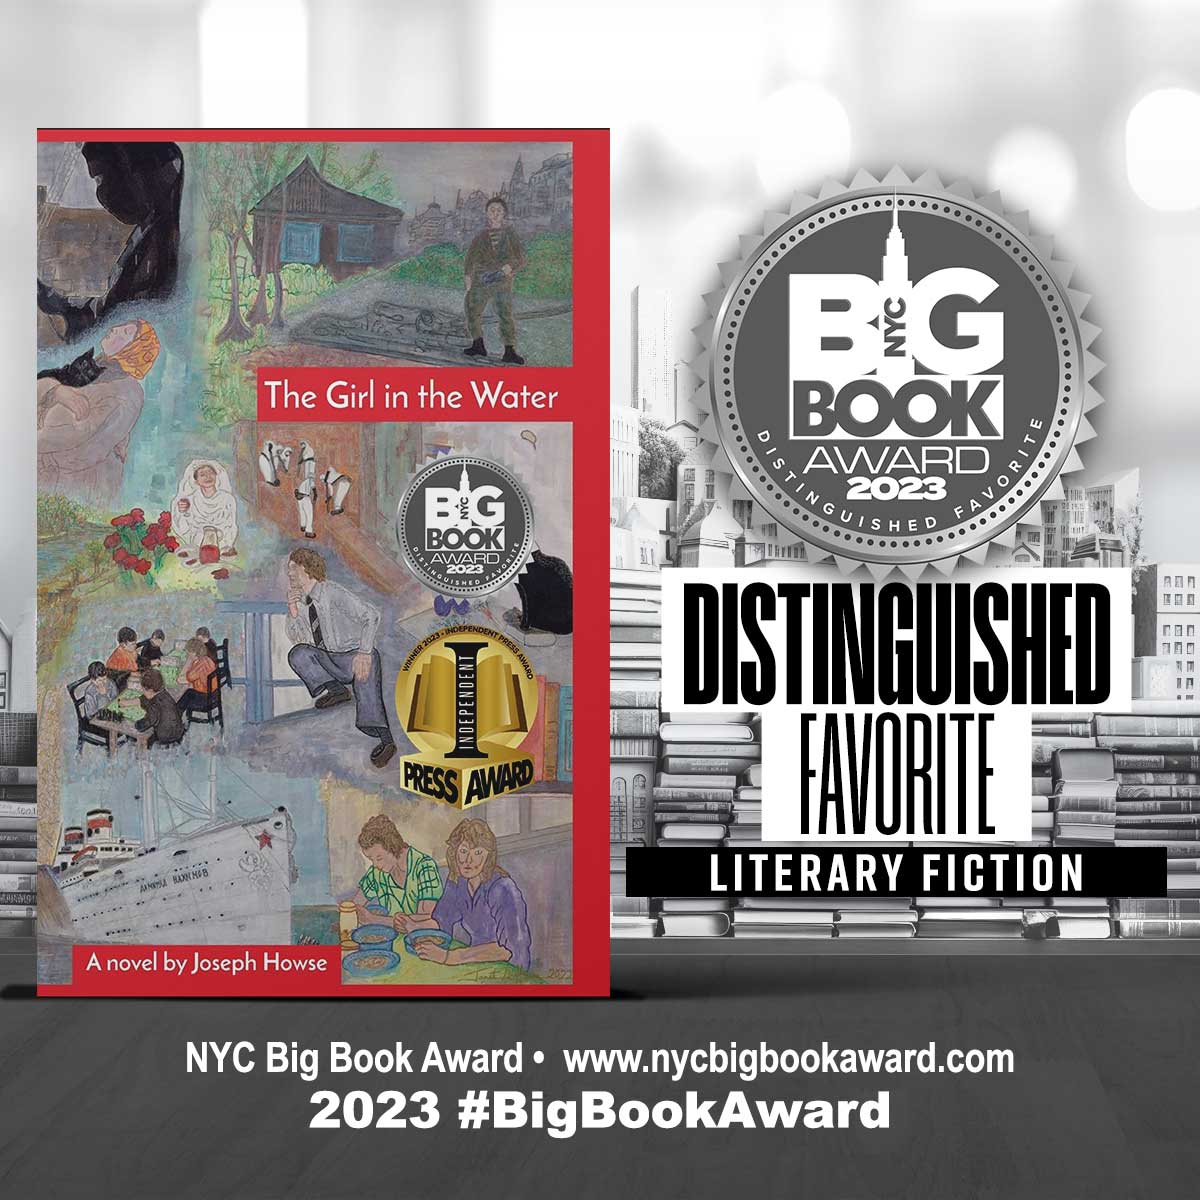 NYC Big Book Award Distinguished Favorite: Literary Fiction